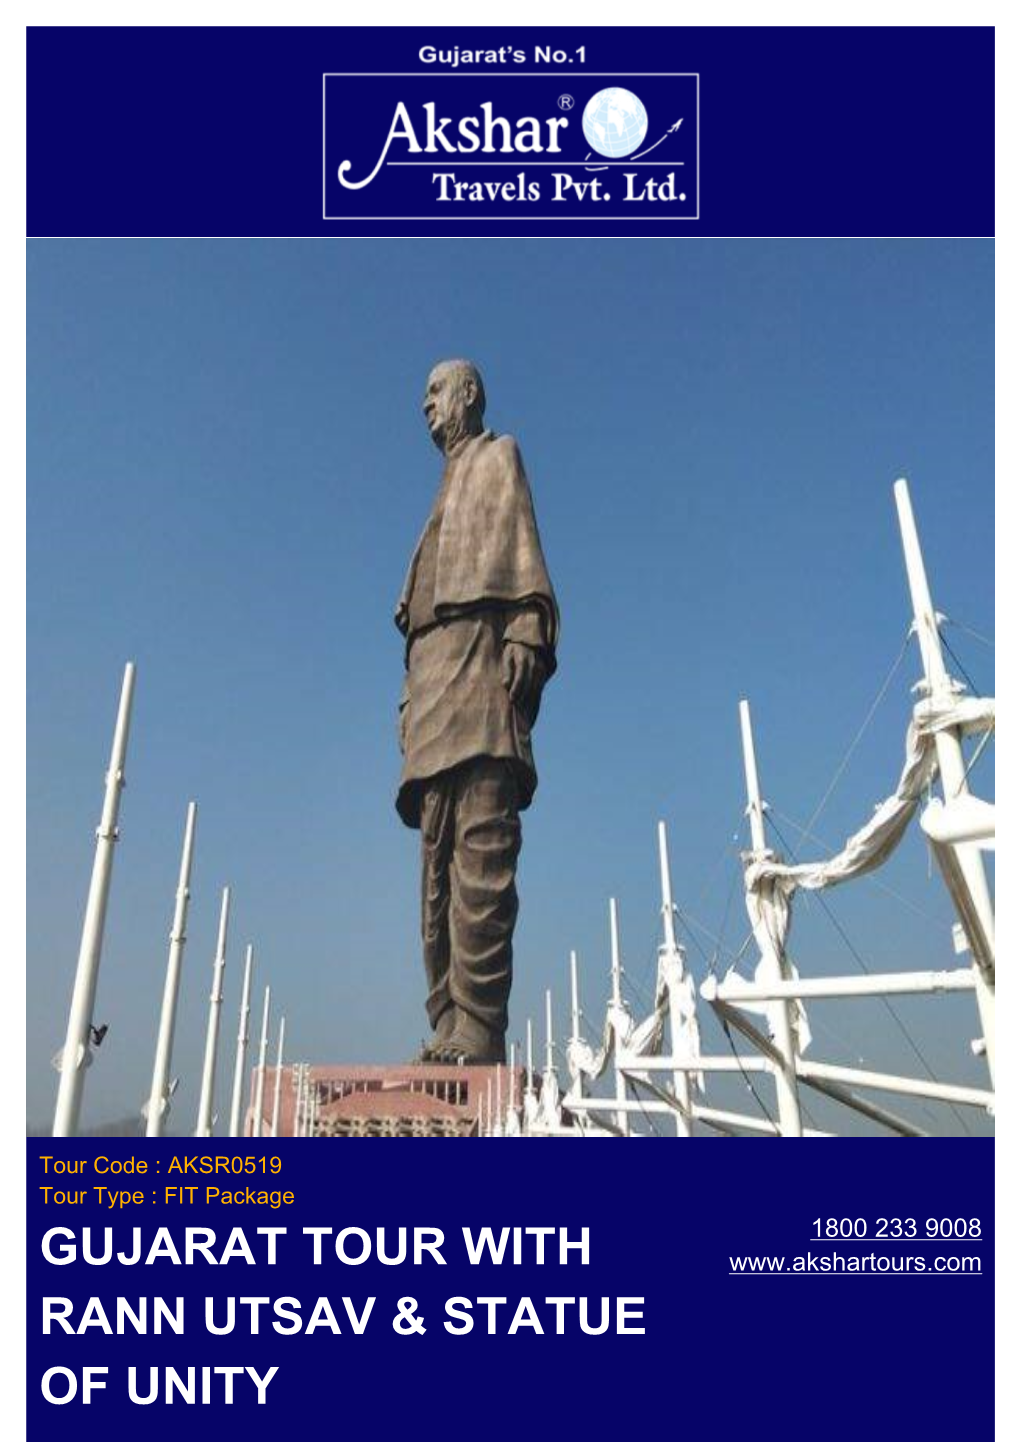 Gujarat Tour with Rann Utsav & Statue of Unity